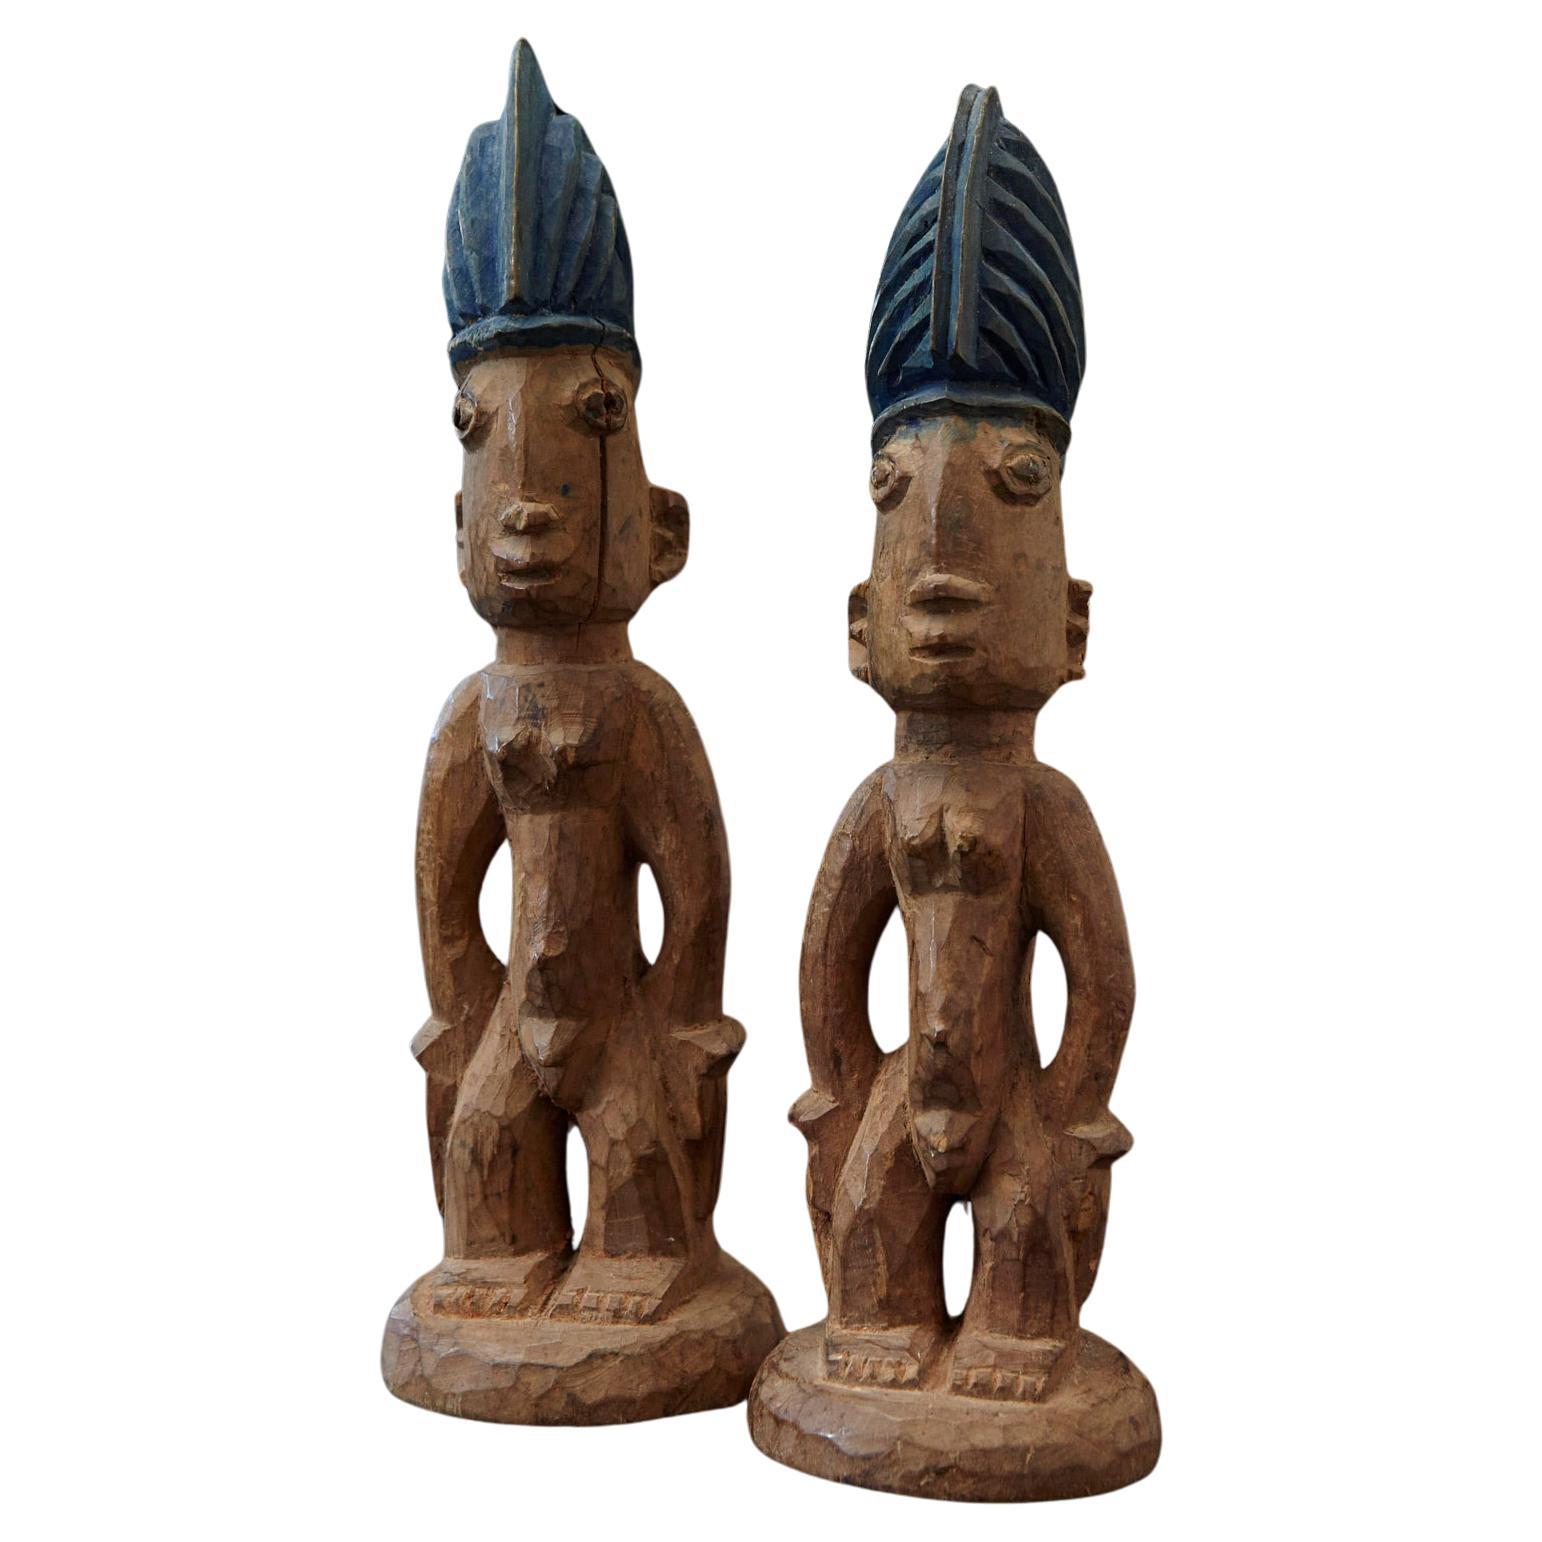 Ere Ibeji Pair of Commemorative Figures, Egba, Yoruba People, Nigeria, 20th C